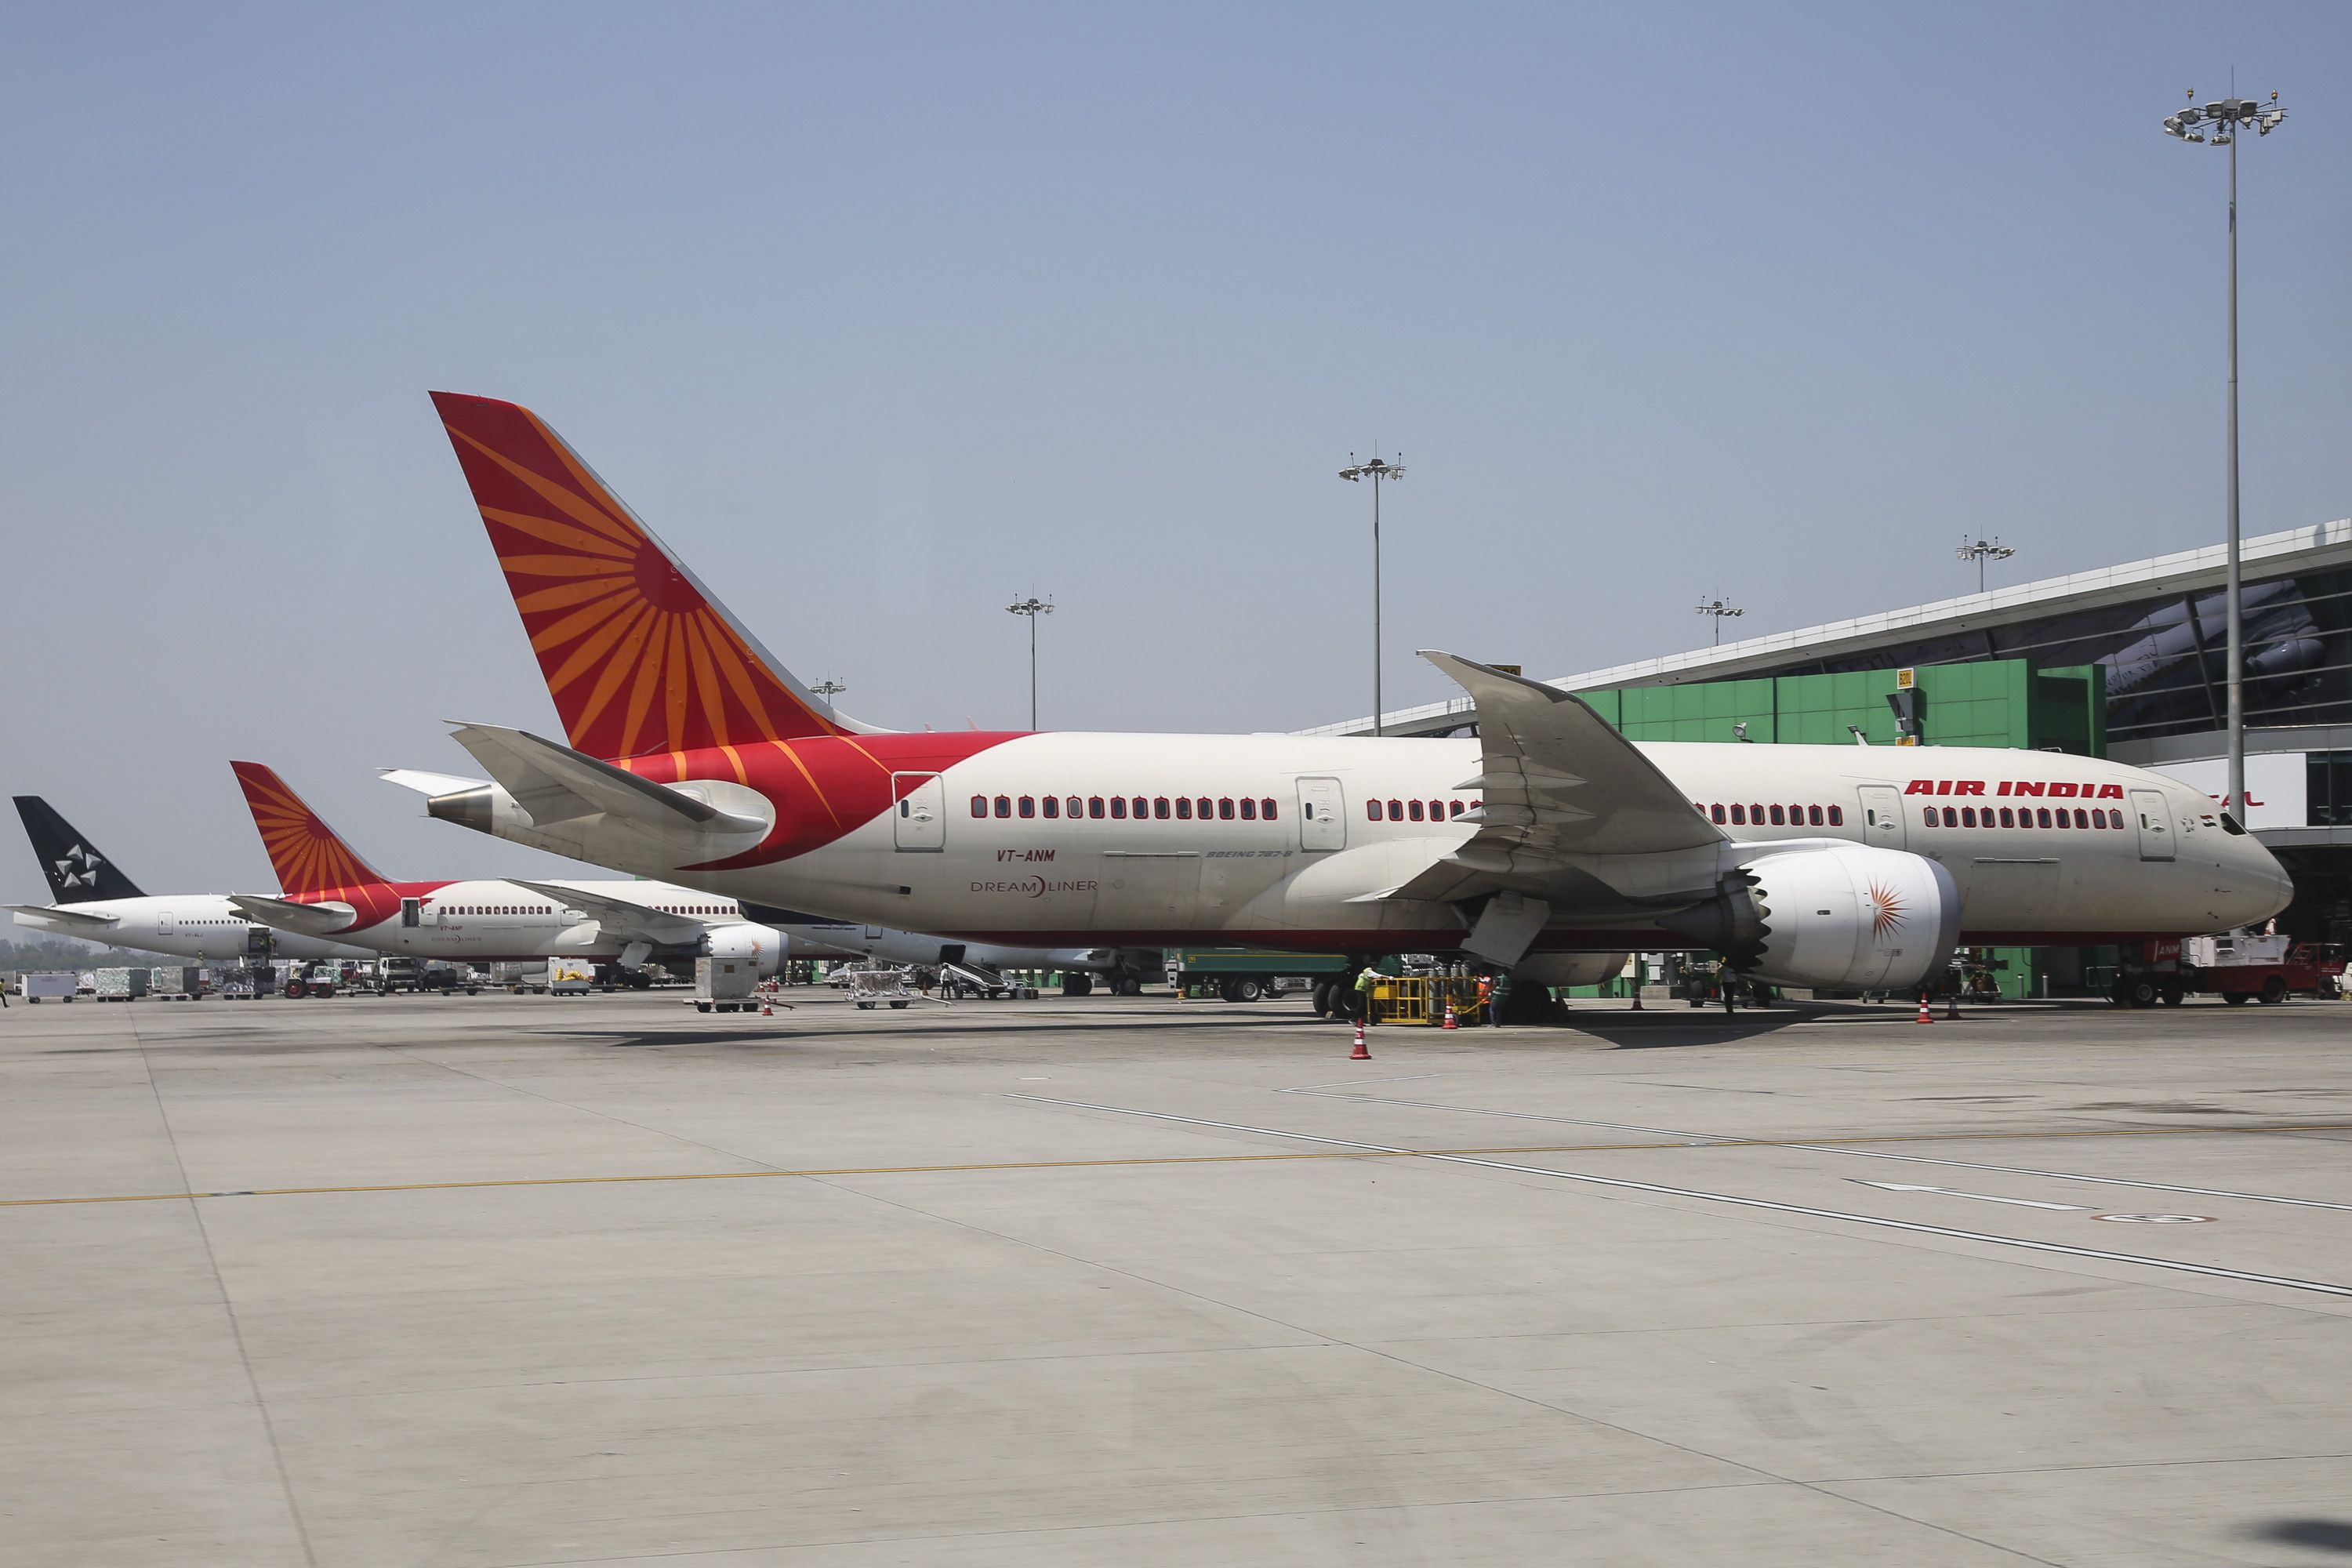 Air India Boeing 787 aircraft seen at Delhi Airport